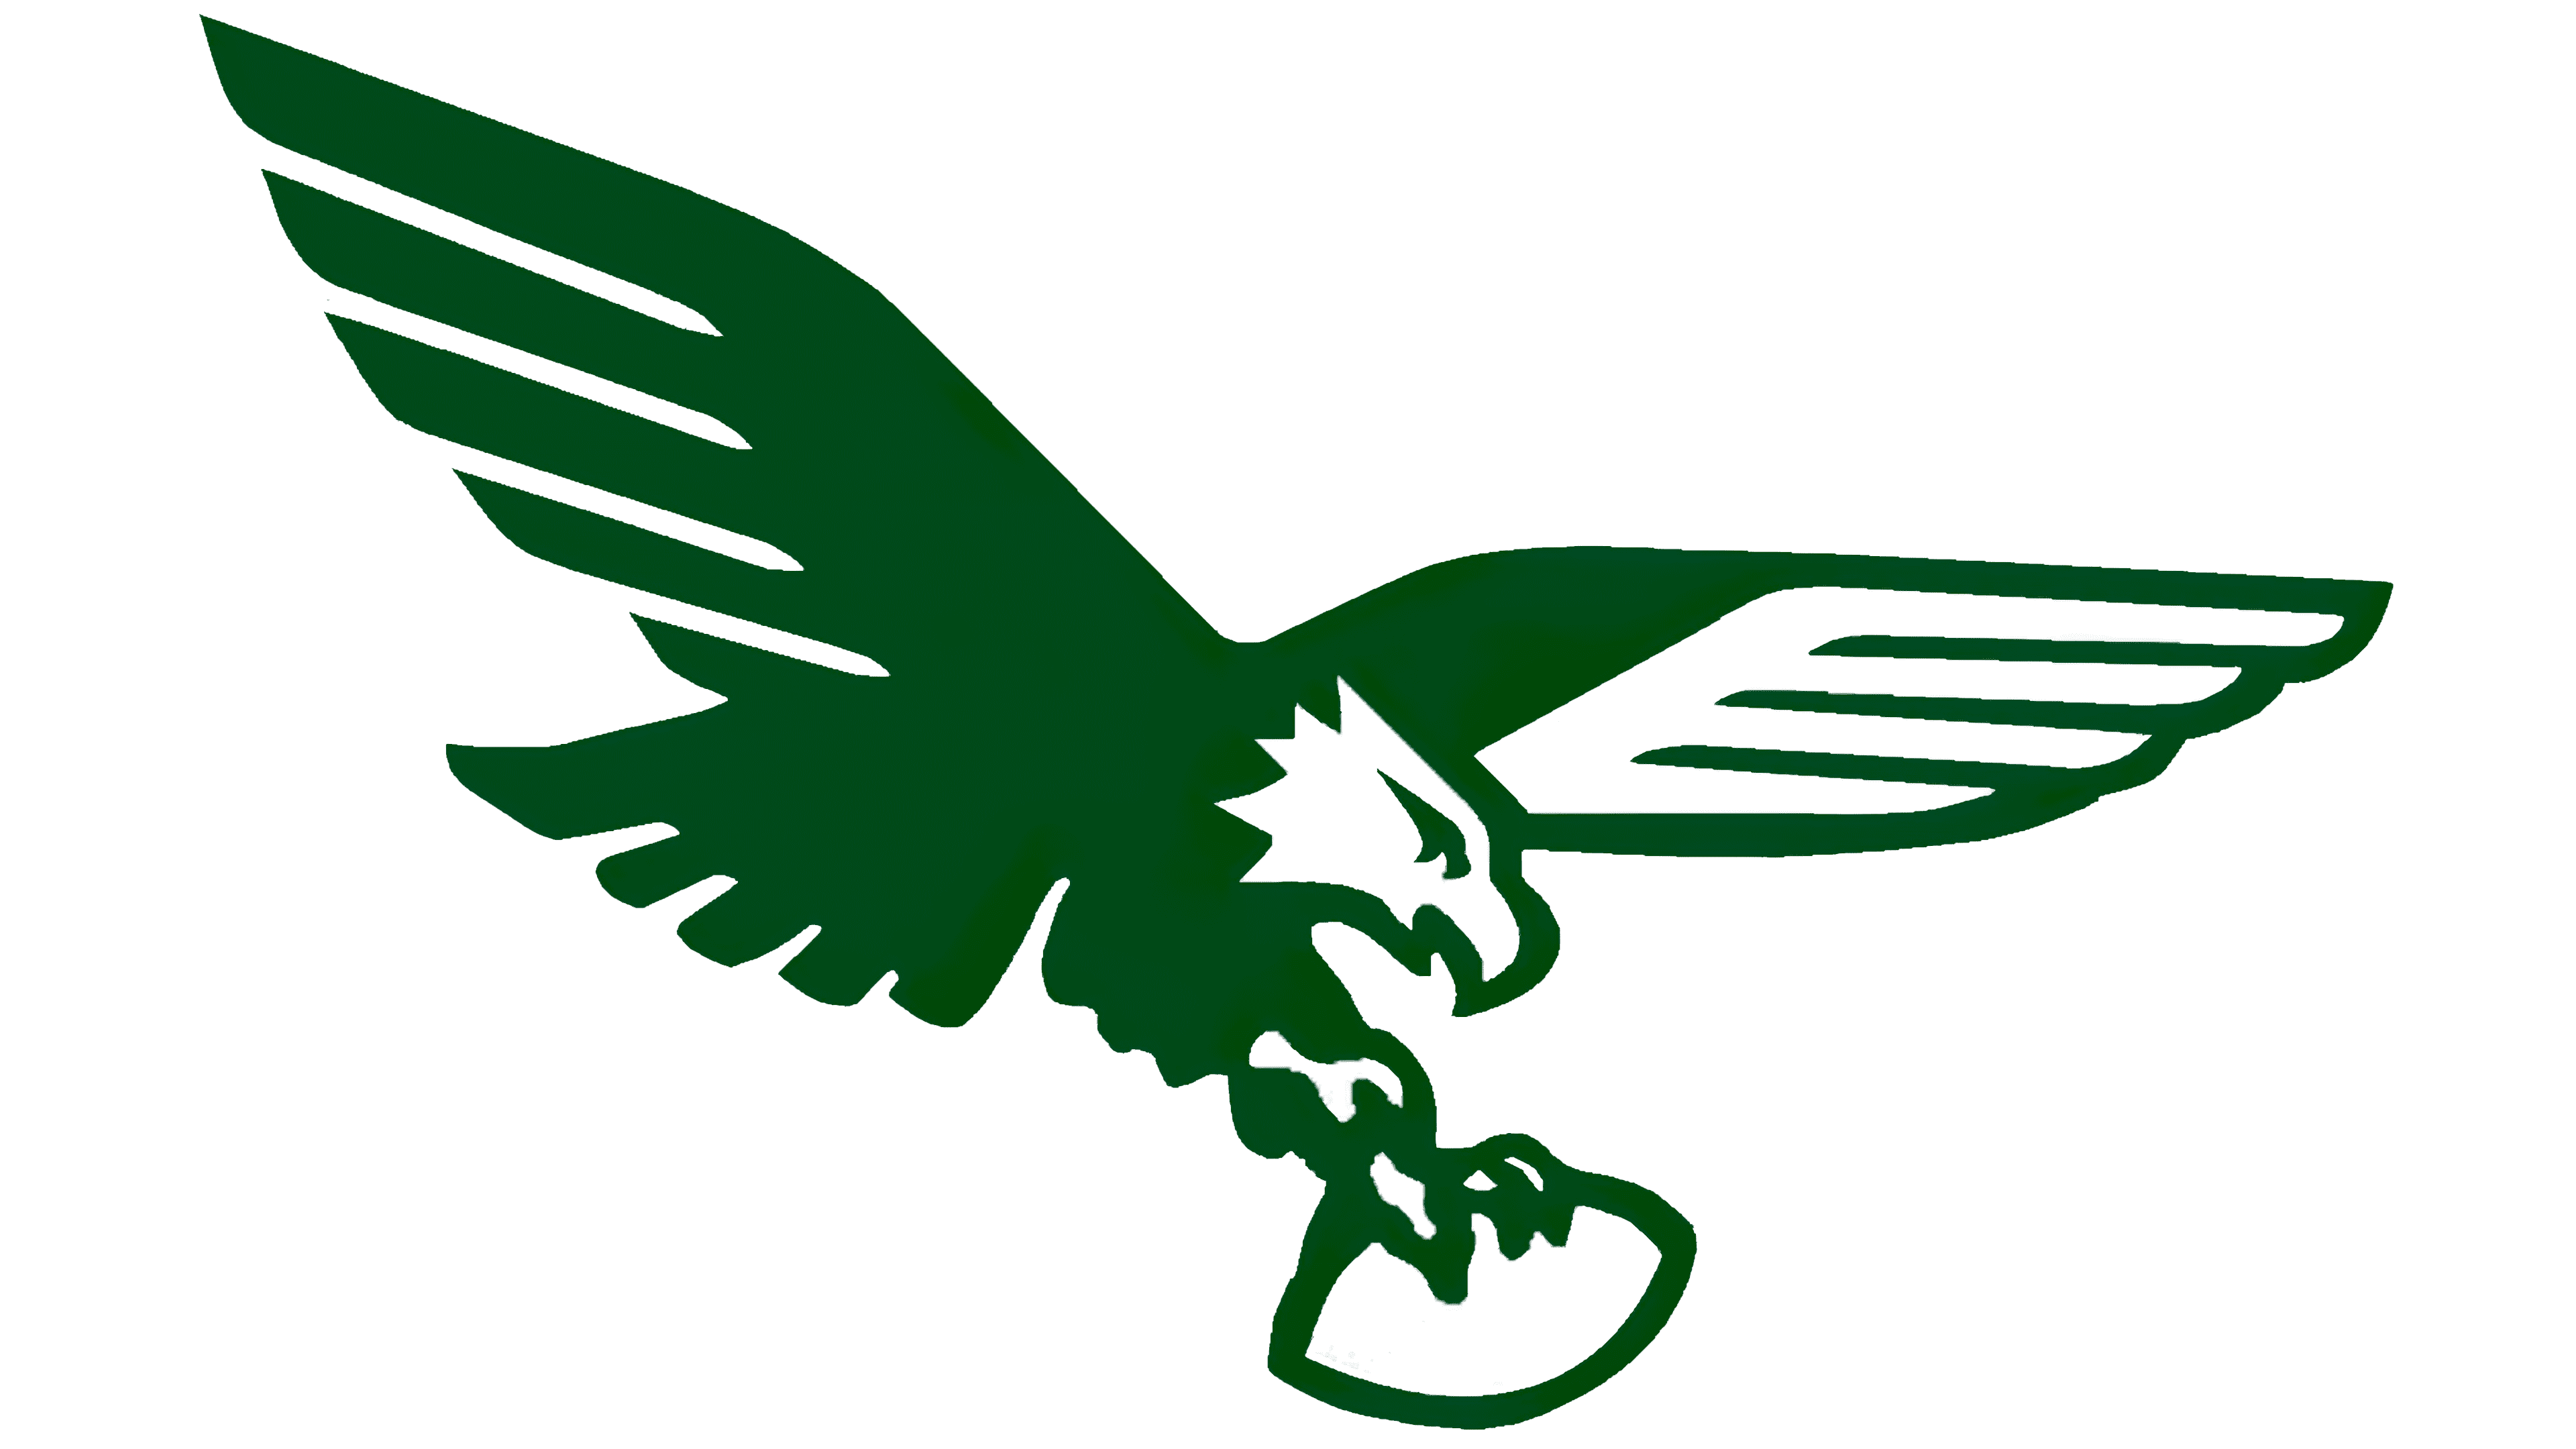 philadelphia-logo-eagles-emsekflol